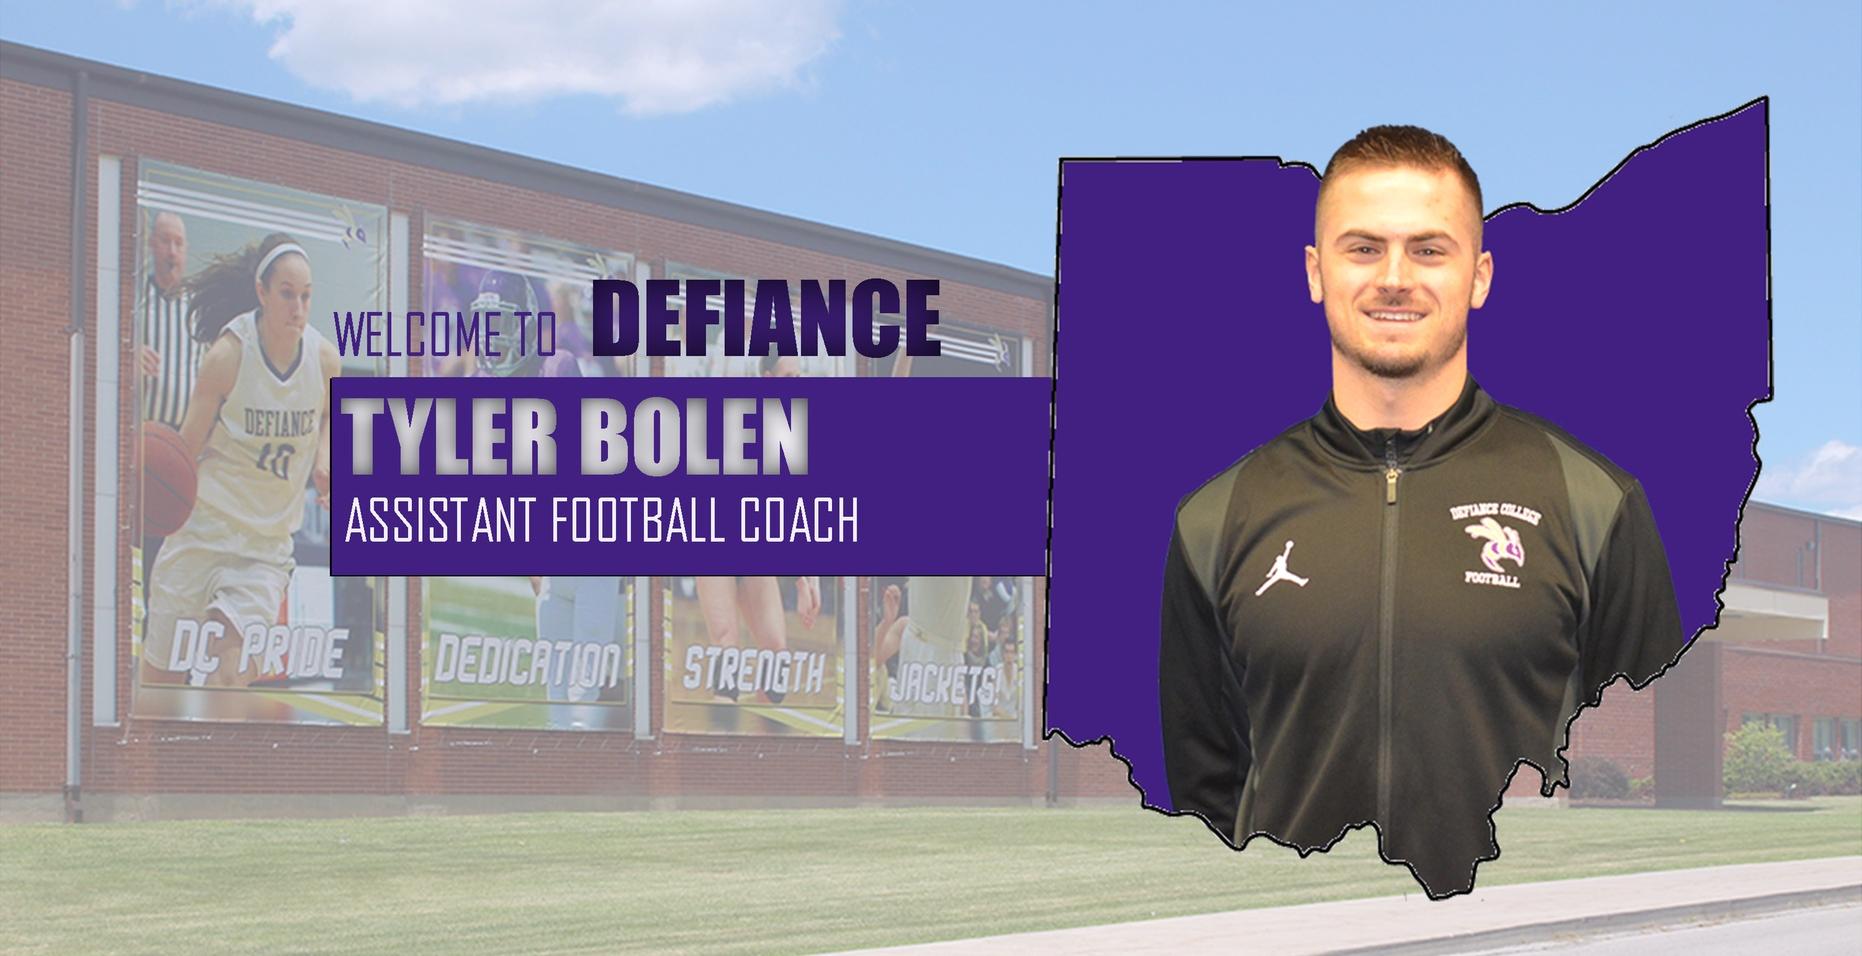 Defiance Welcomes Tyler Bolen to Coaching Staff